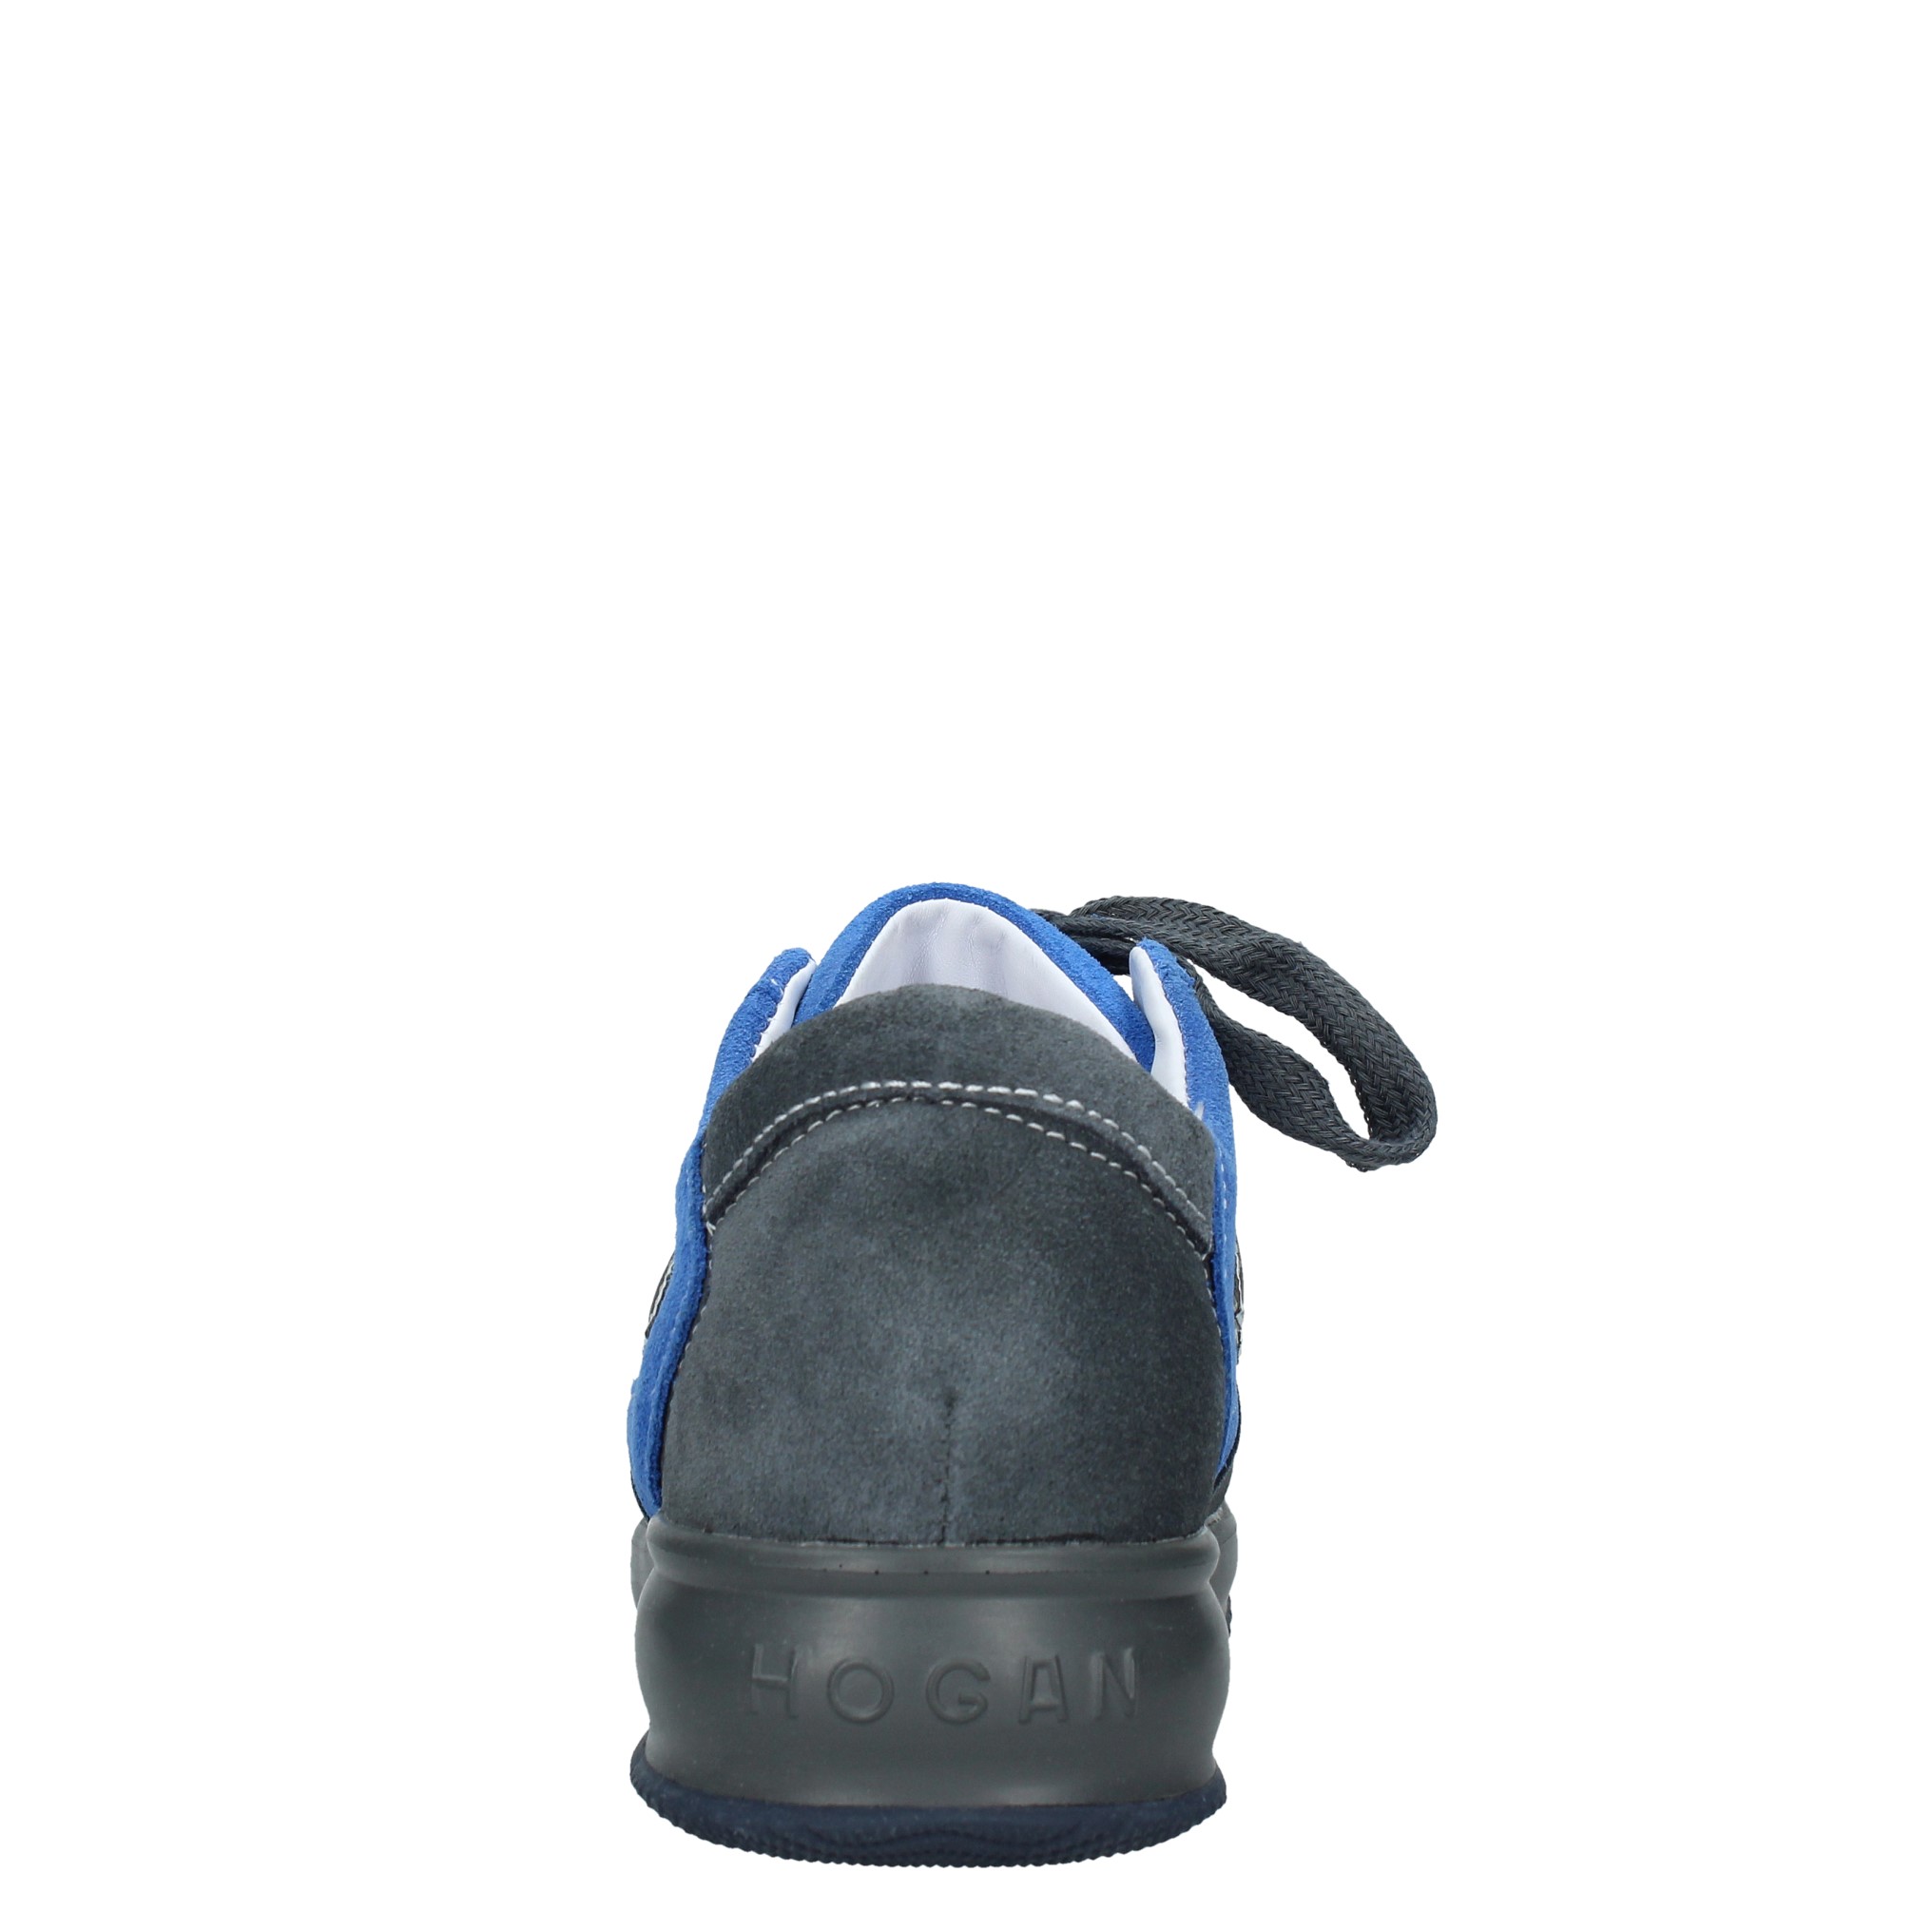 Suede and fabric sneakers HOGAN | VD0215GRIGIO BIANCO E BLU